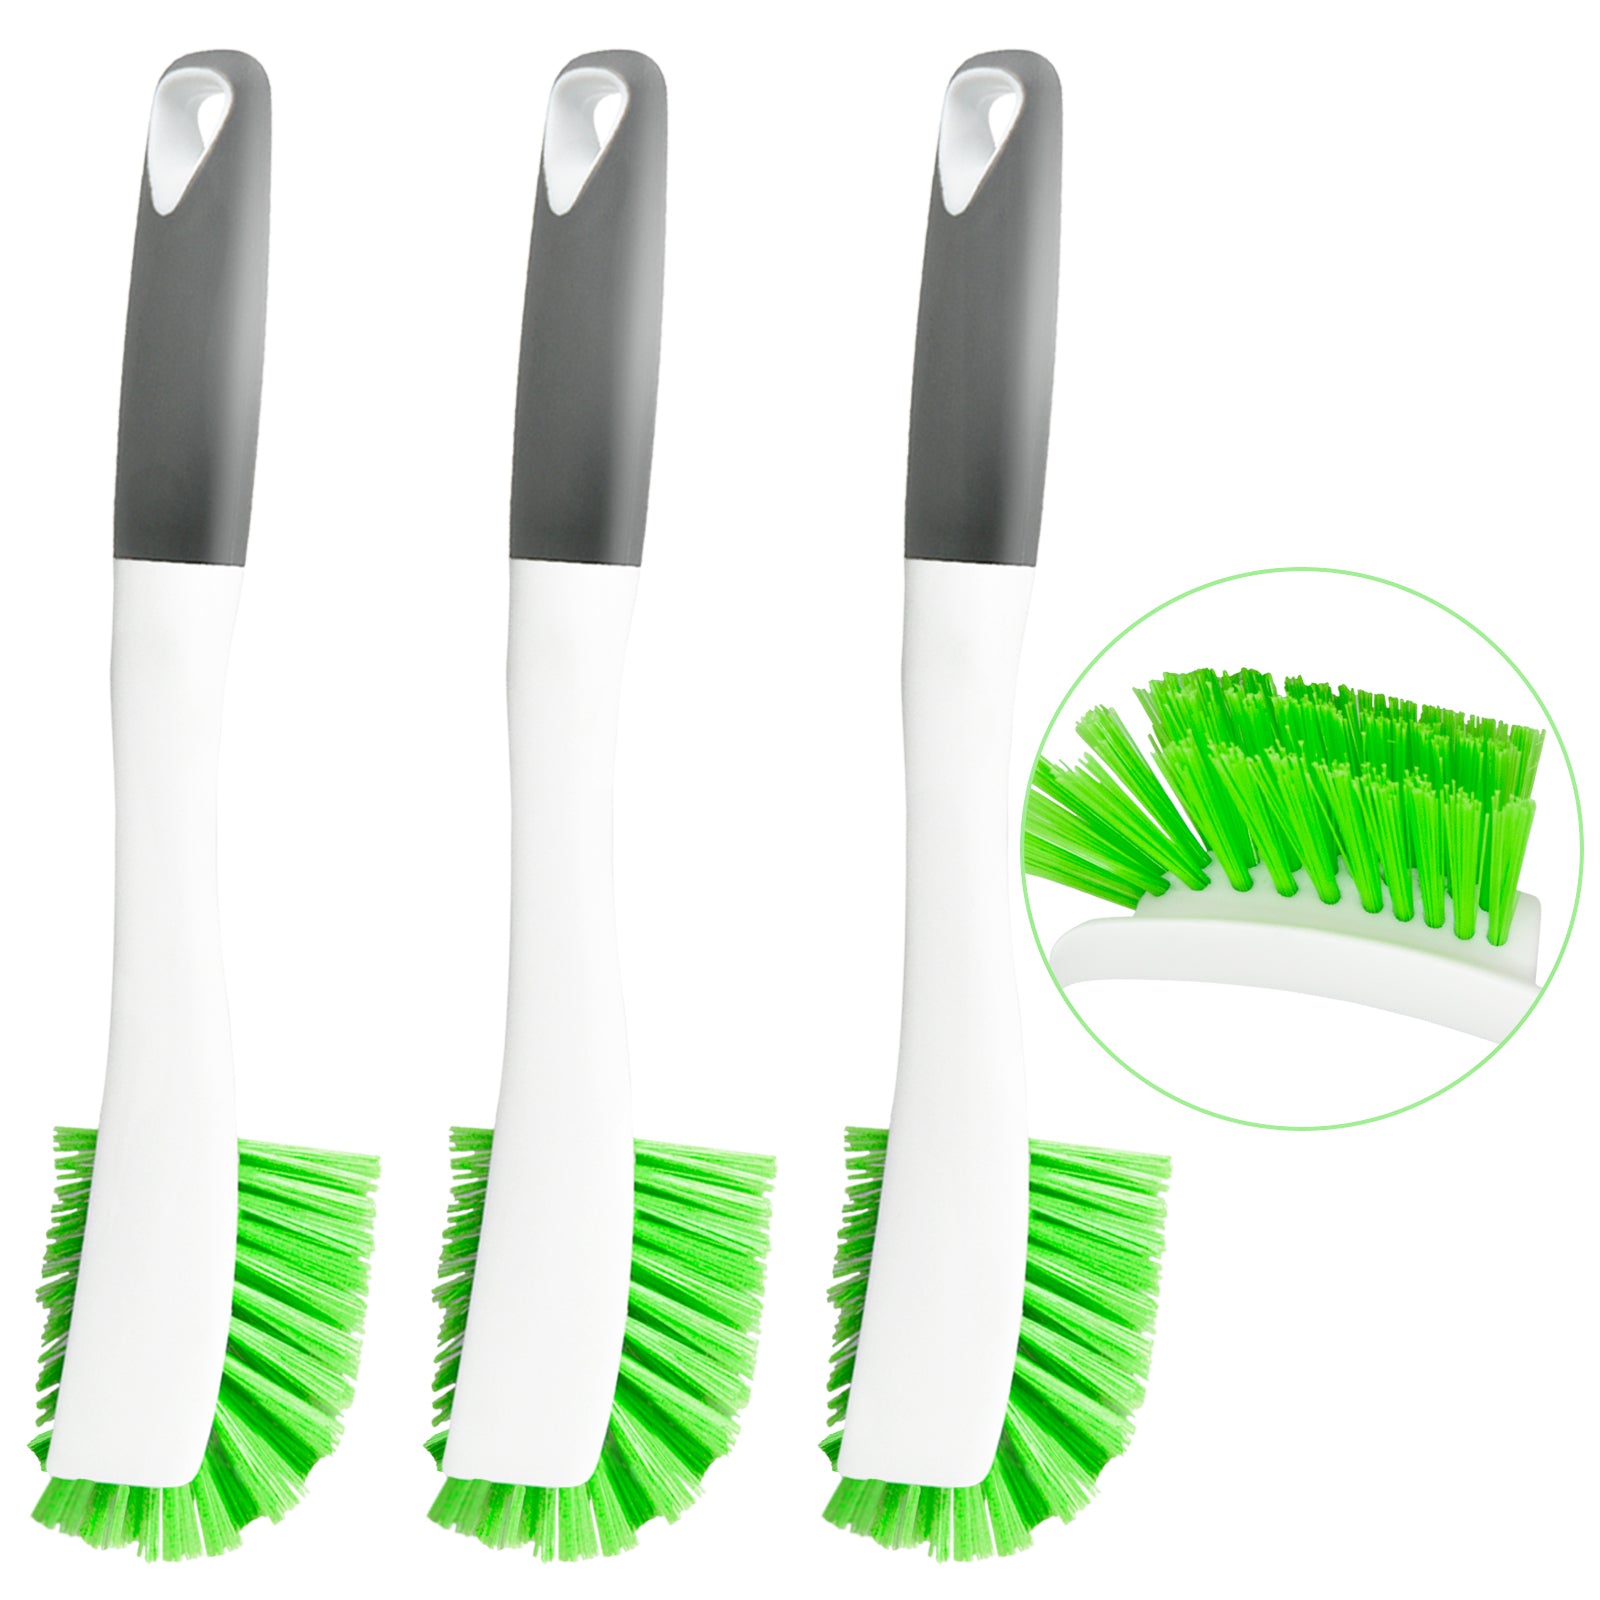 ITTAHO Dish Scrub Brush Kit, Kitchen Dish Brush Set for Cleaning - 3 P